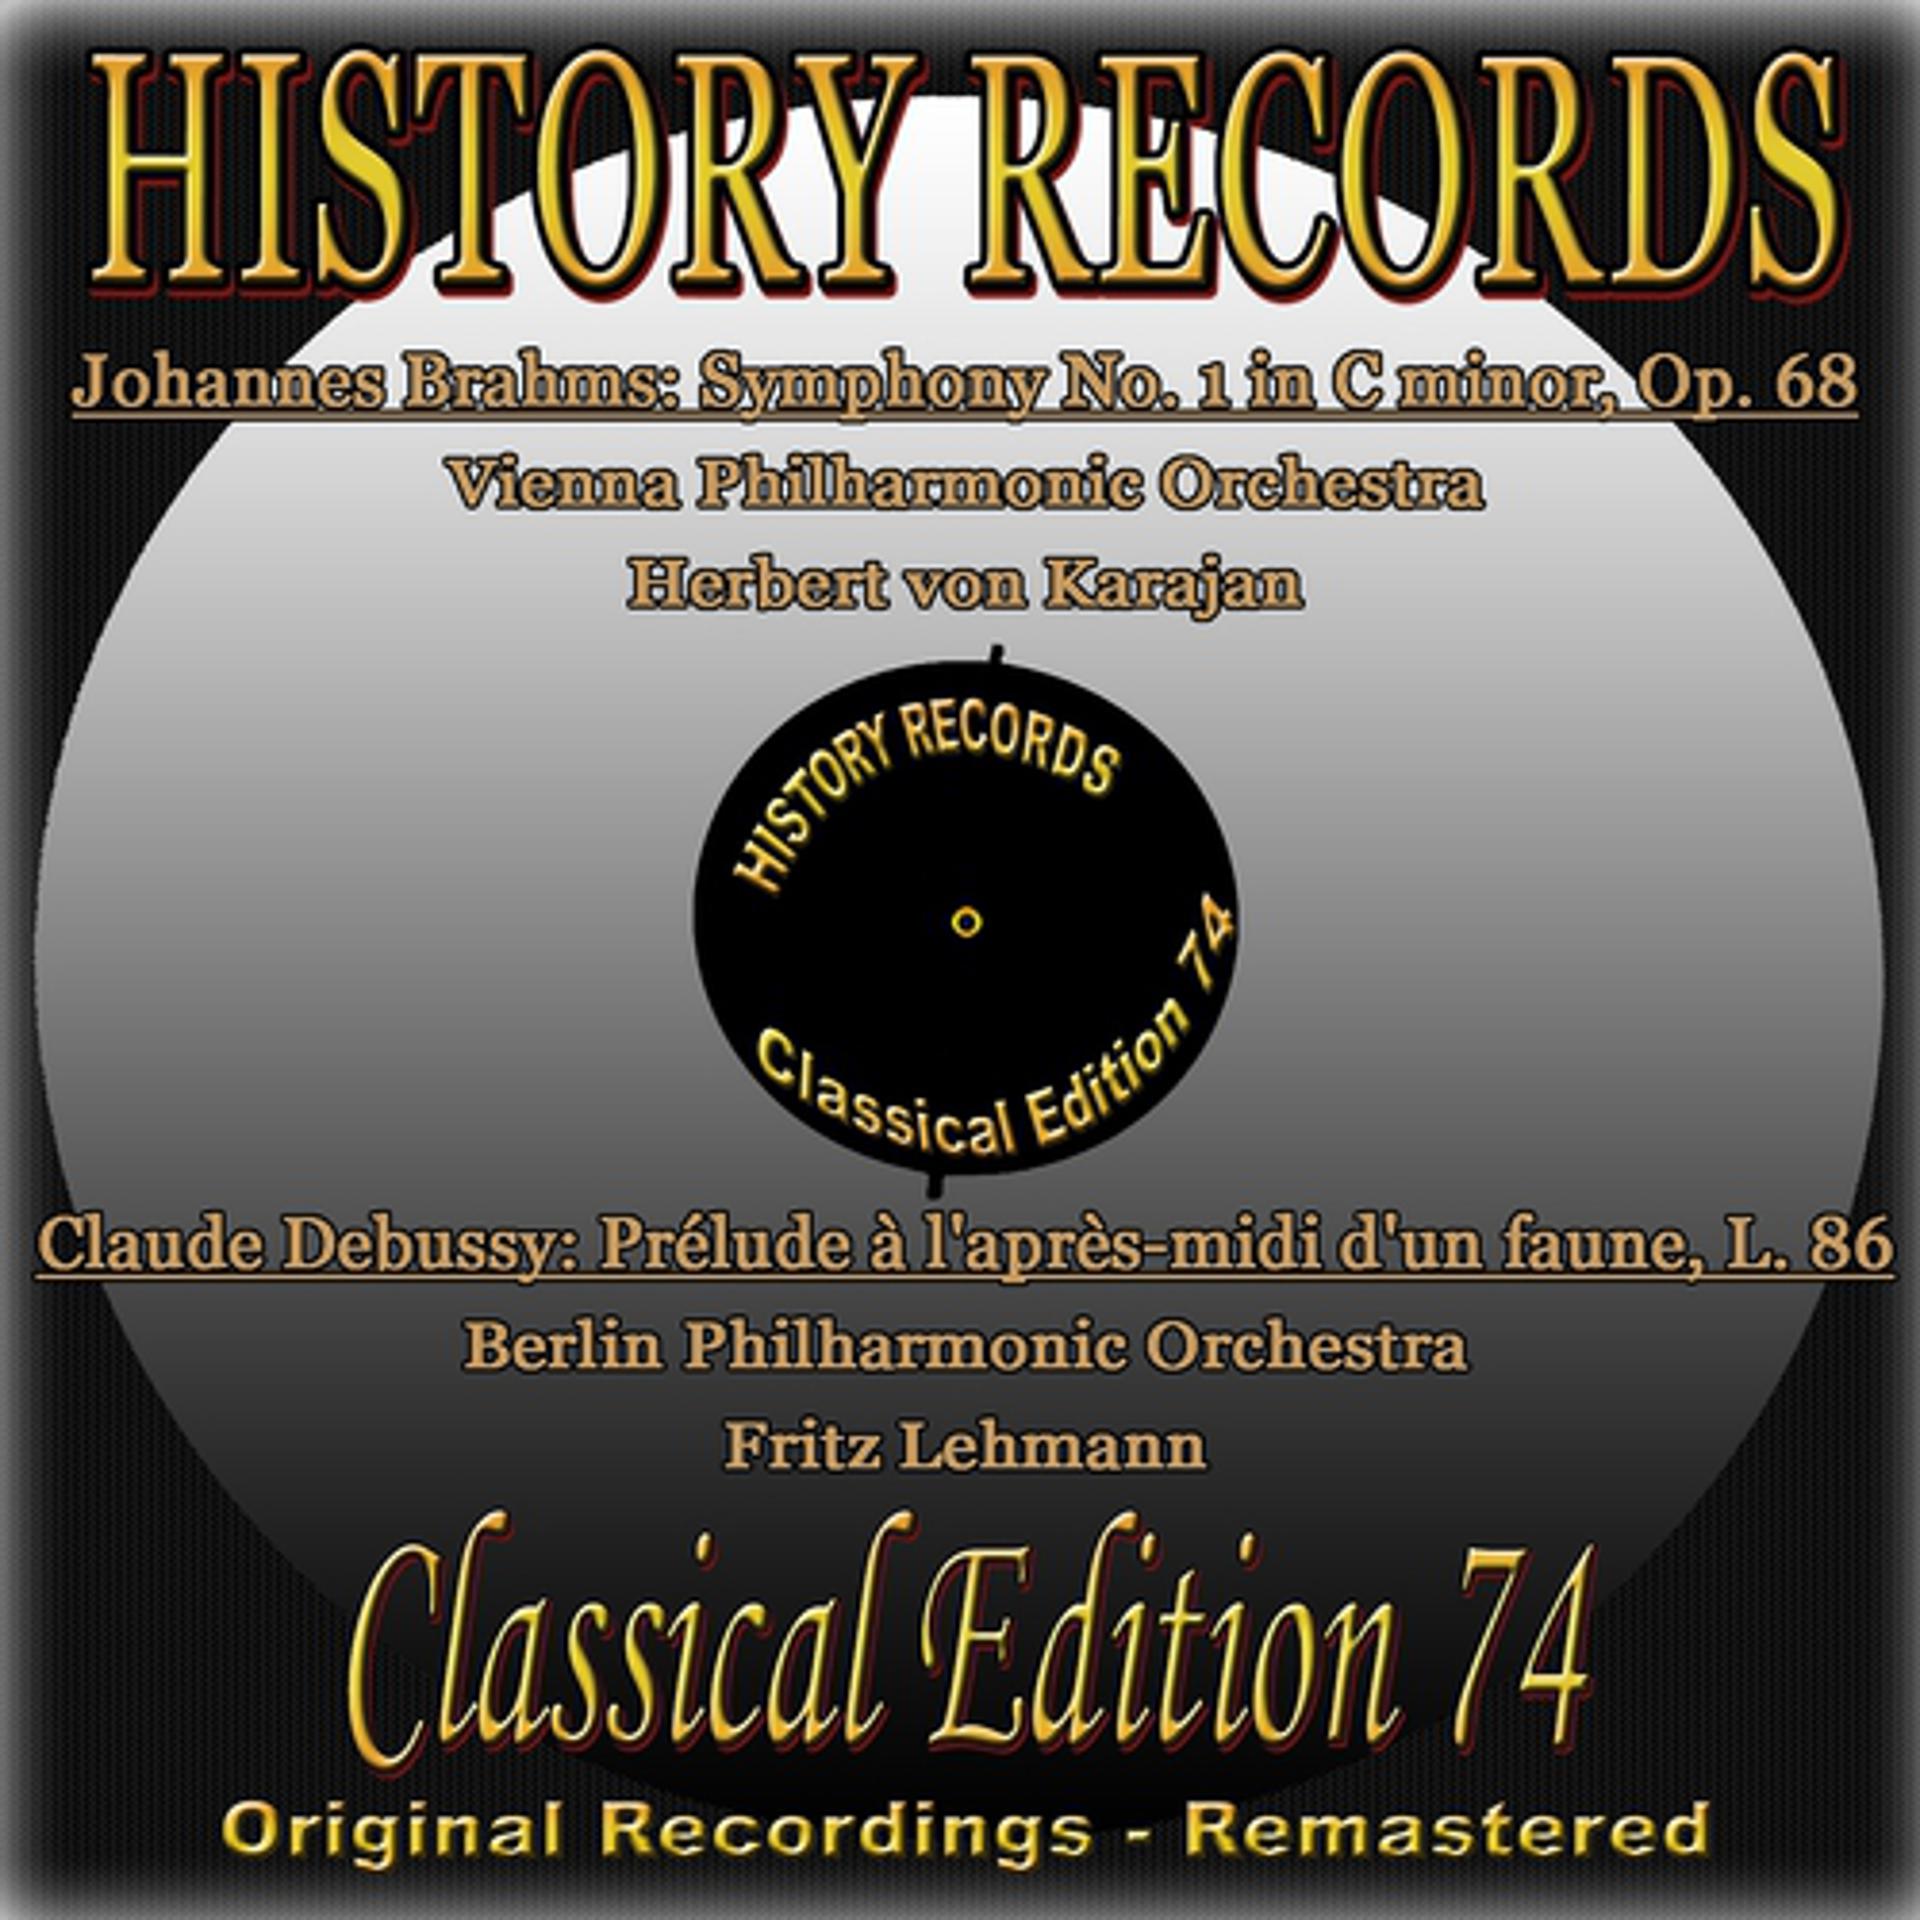 Постер альбома History Records - Classical Edition 74 (Original Recordings - Remastered)